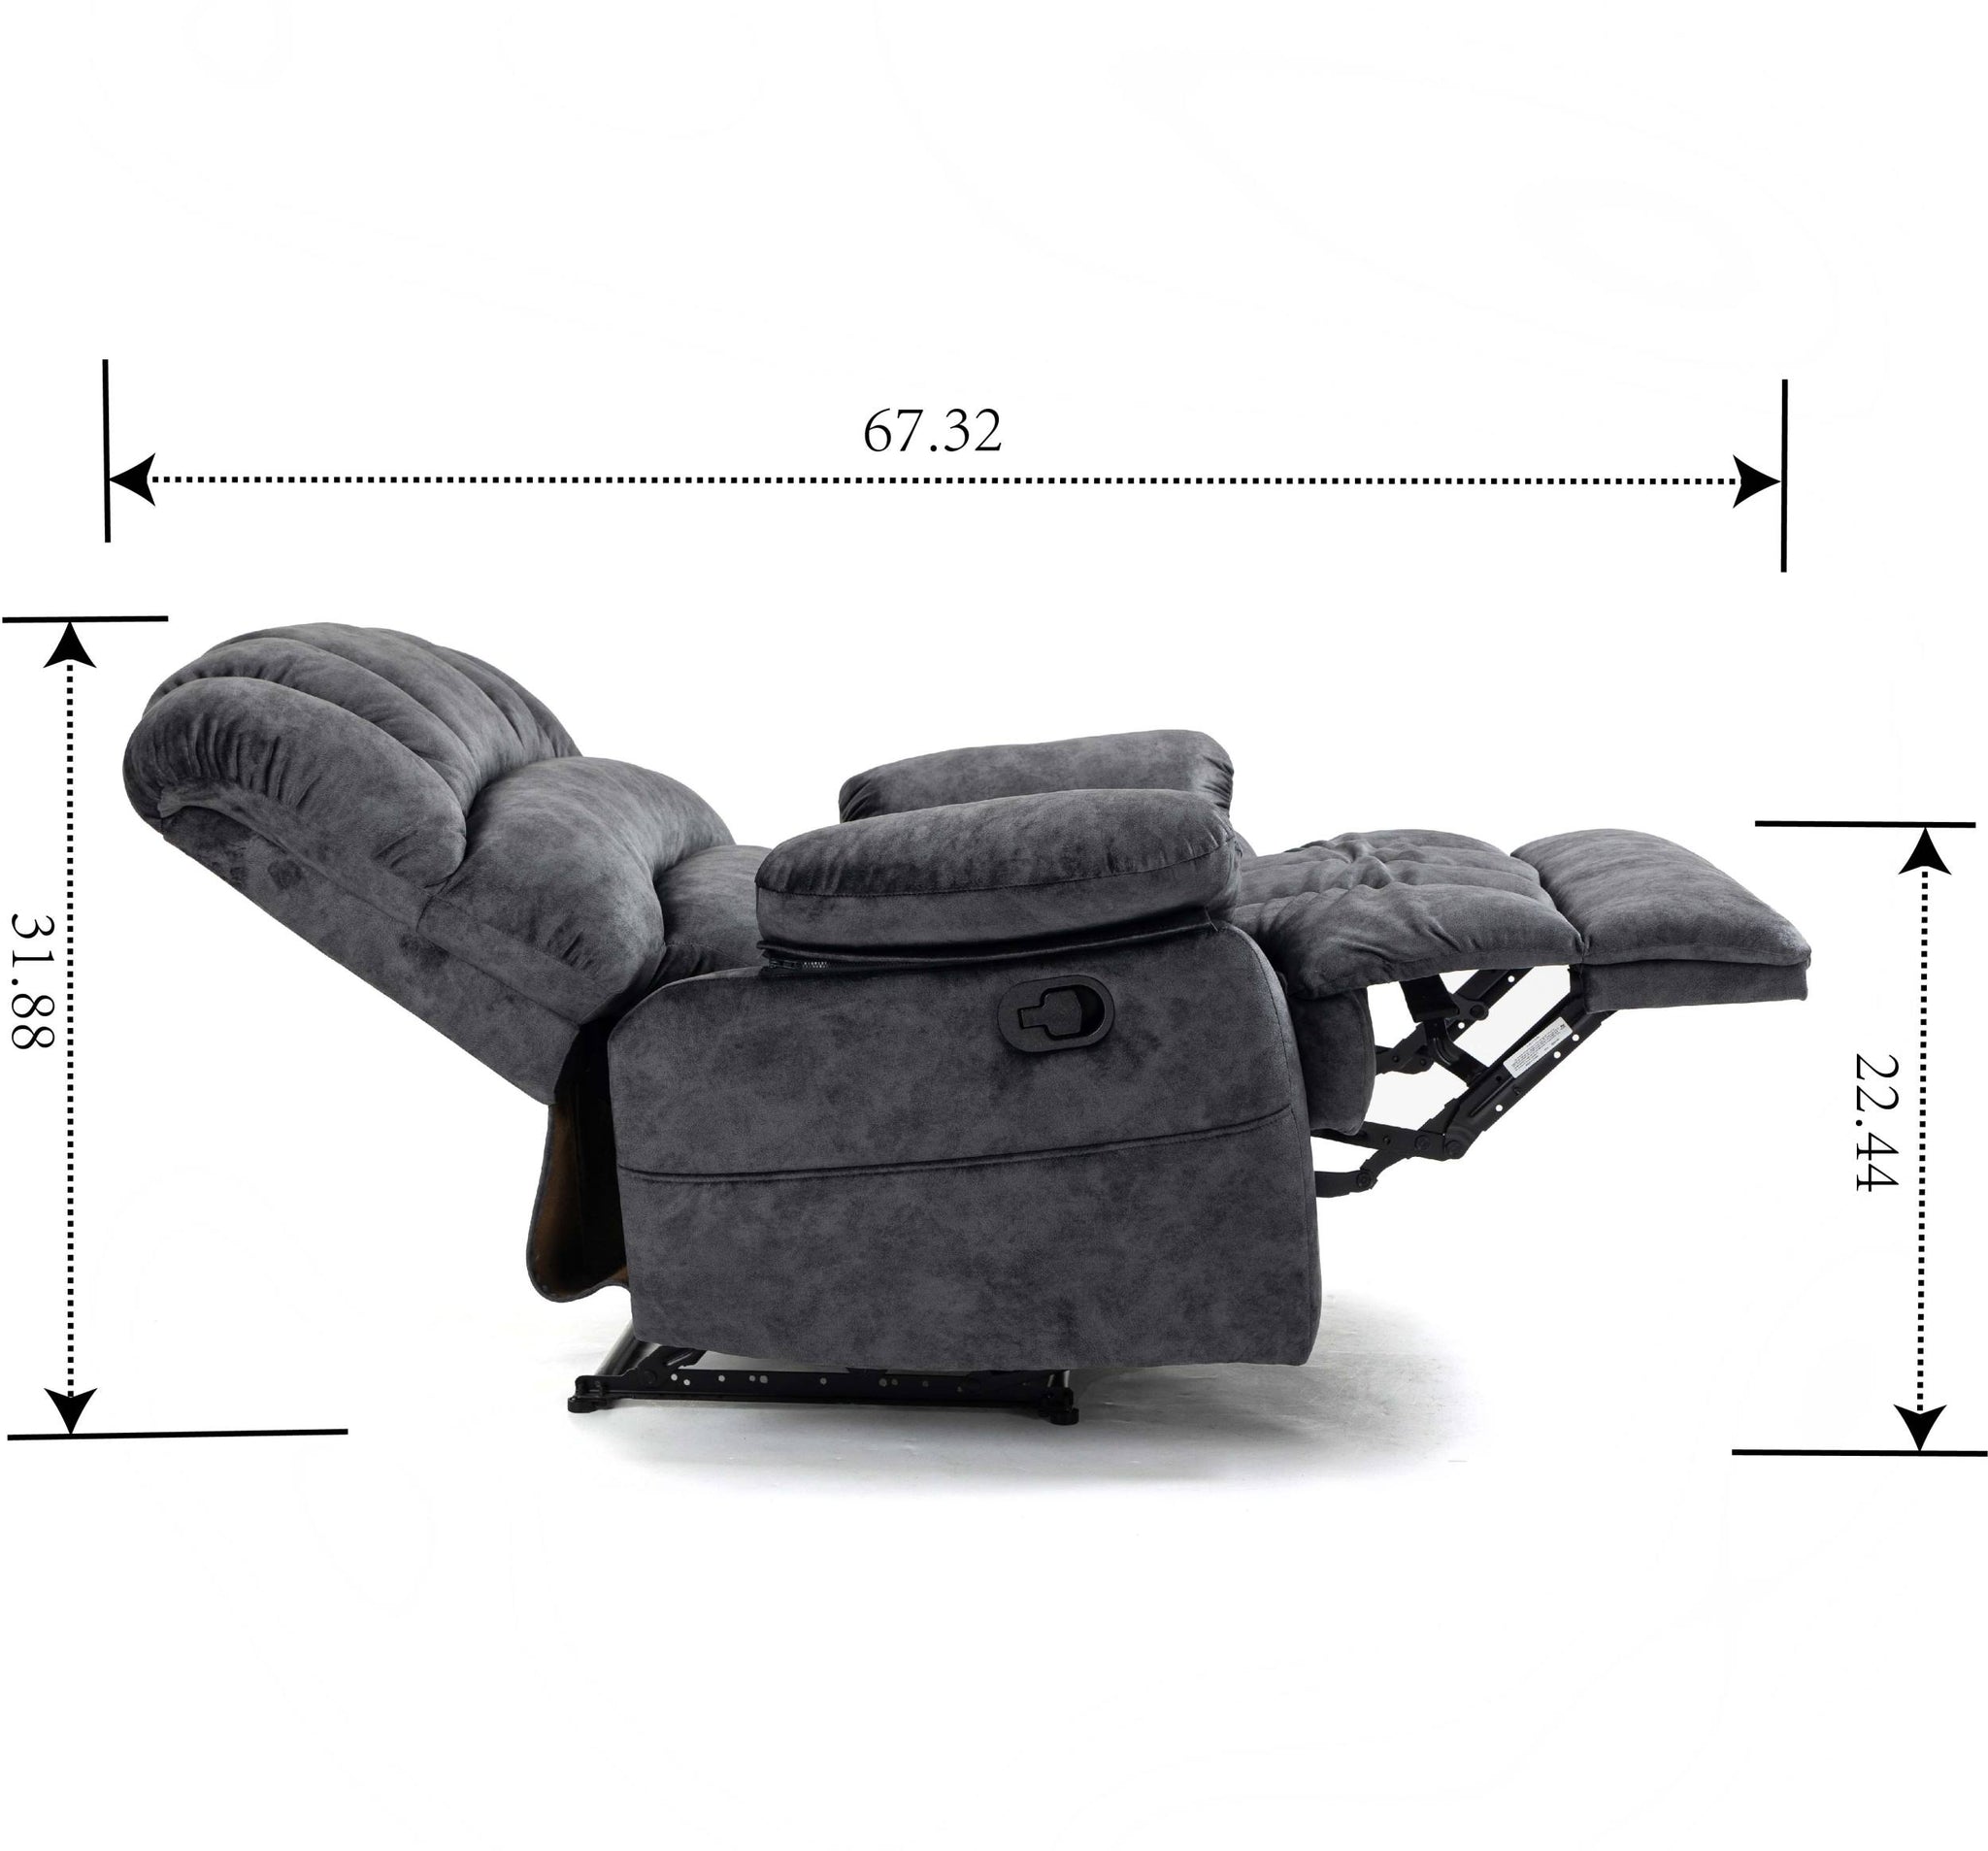 Large Manual Recliner Chair in Fabric for Living Room dark gray-velvet-manual-handle-metal-primary